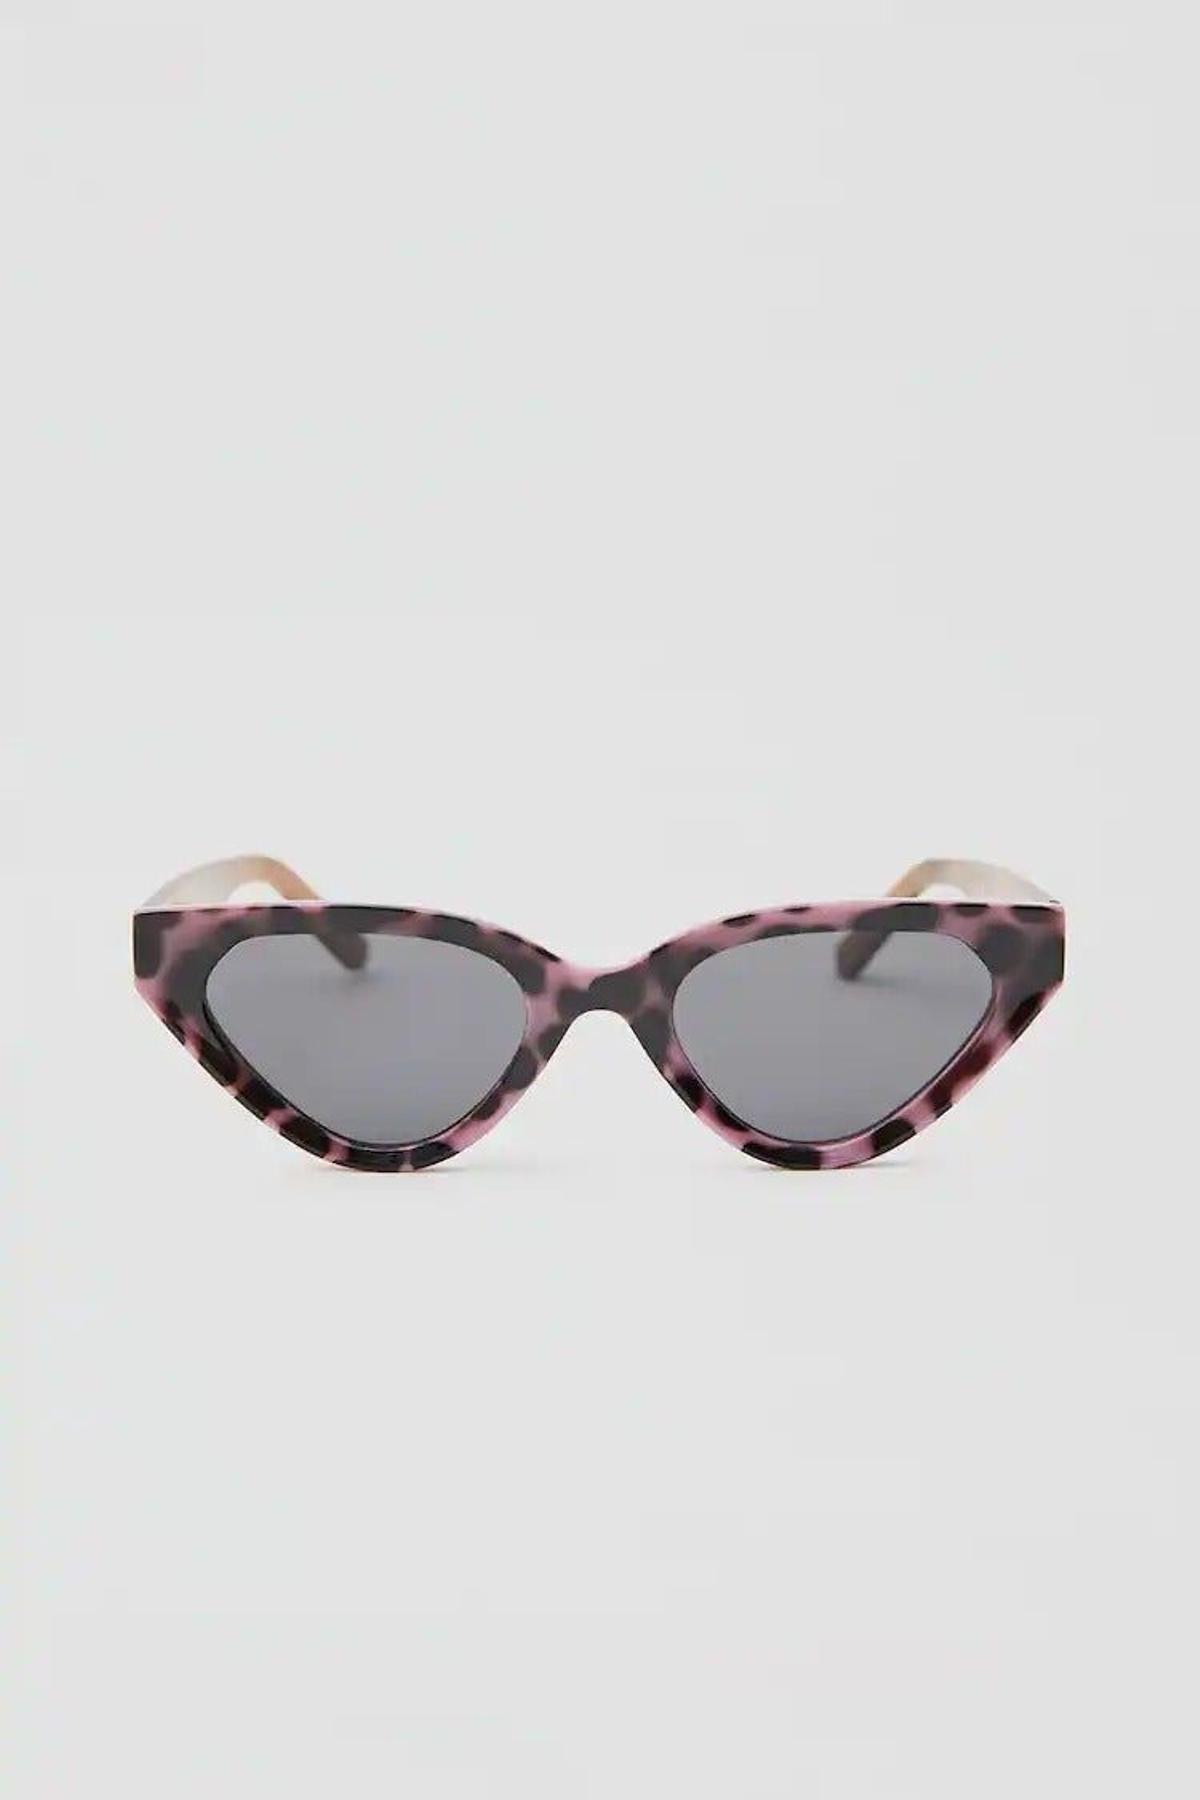 Gafas de sol cat eye bicolor, de Pull&amp;Bear (9,99 euros)